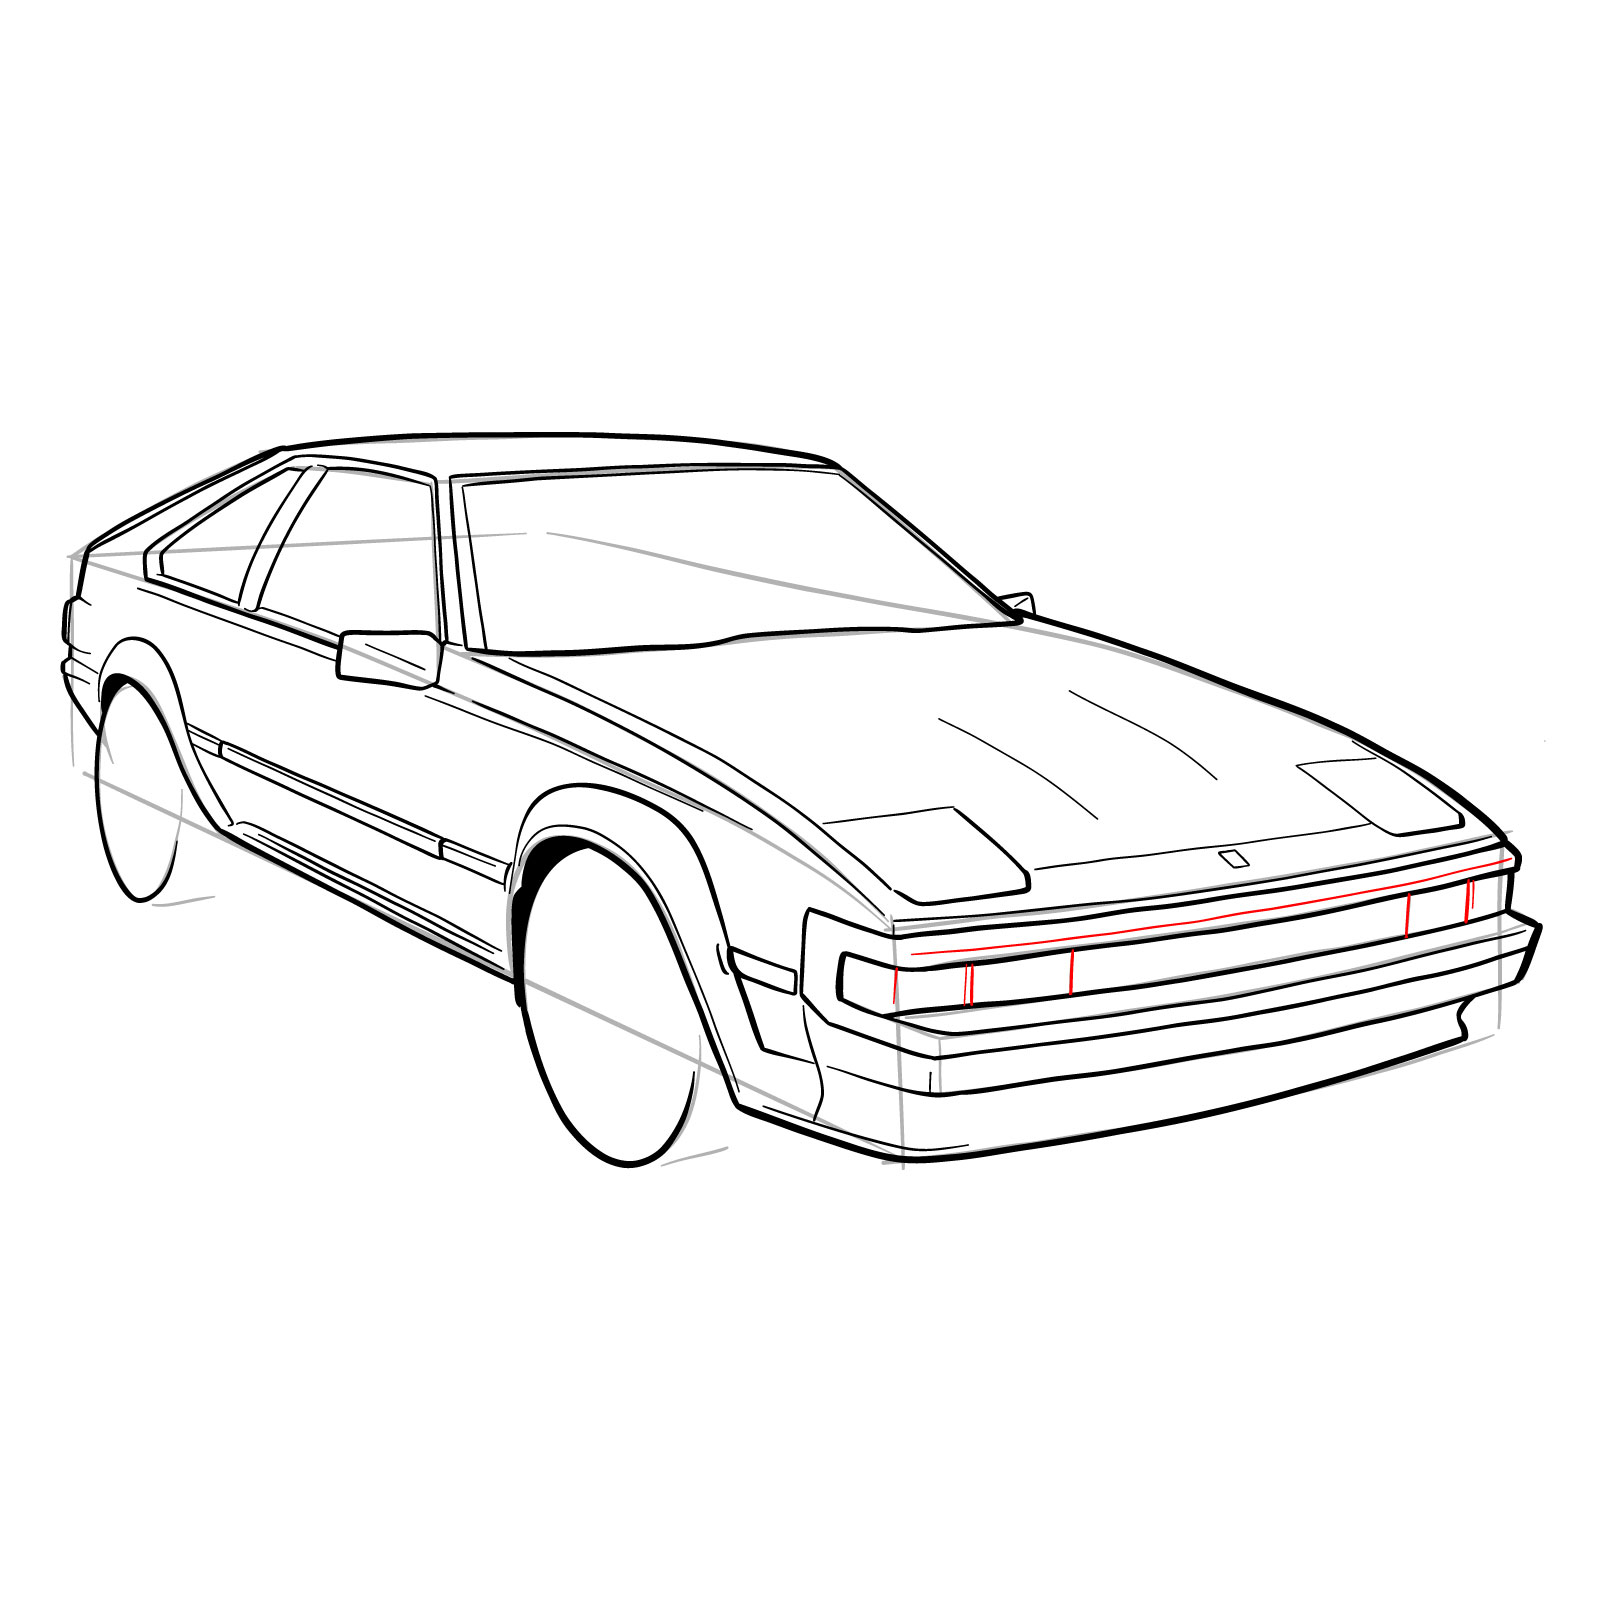 How to draw a 1985 Toyota Celica Supra P Type MK 2 - step 27